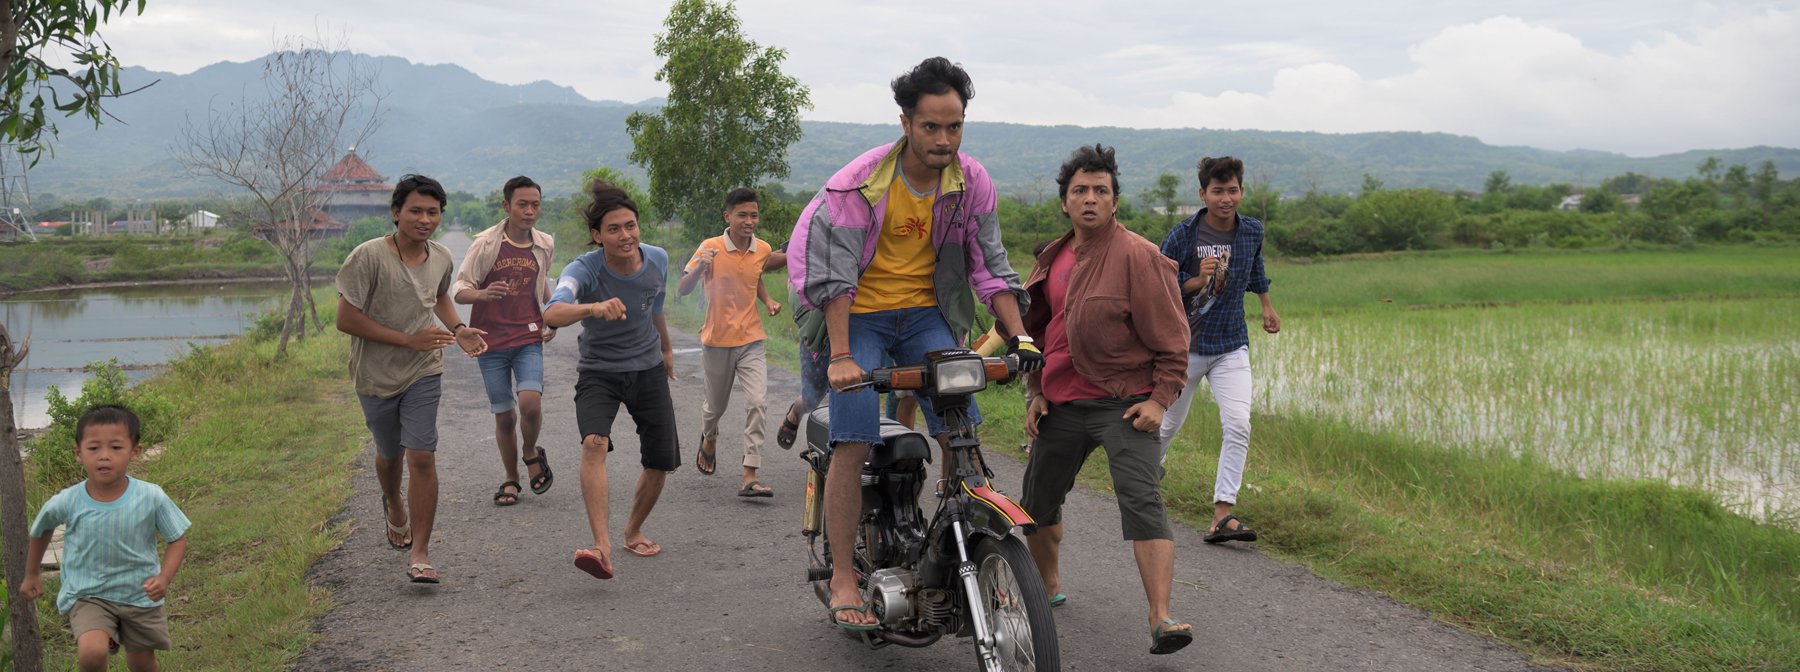 Not So, Macho Man – Toxic Masculinity in East Asian Cinema